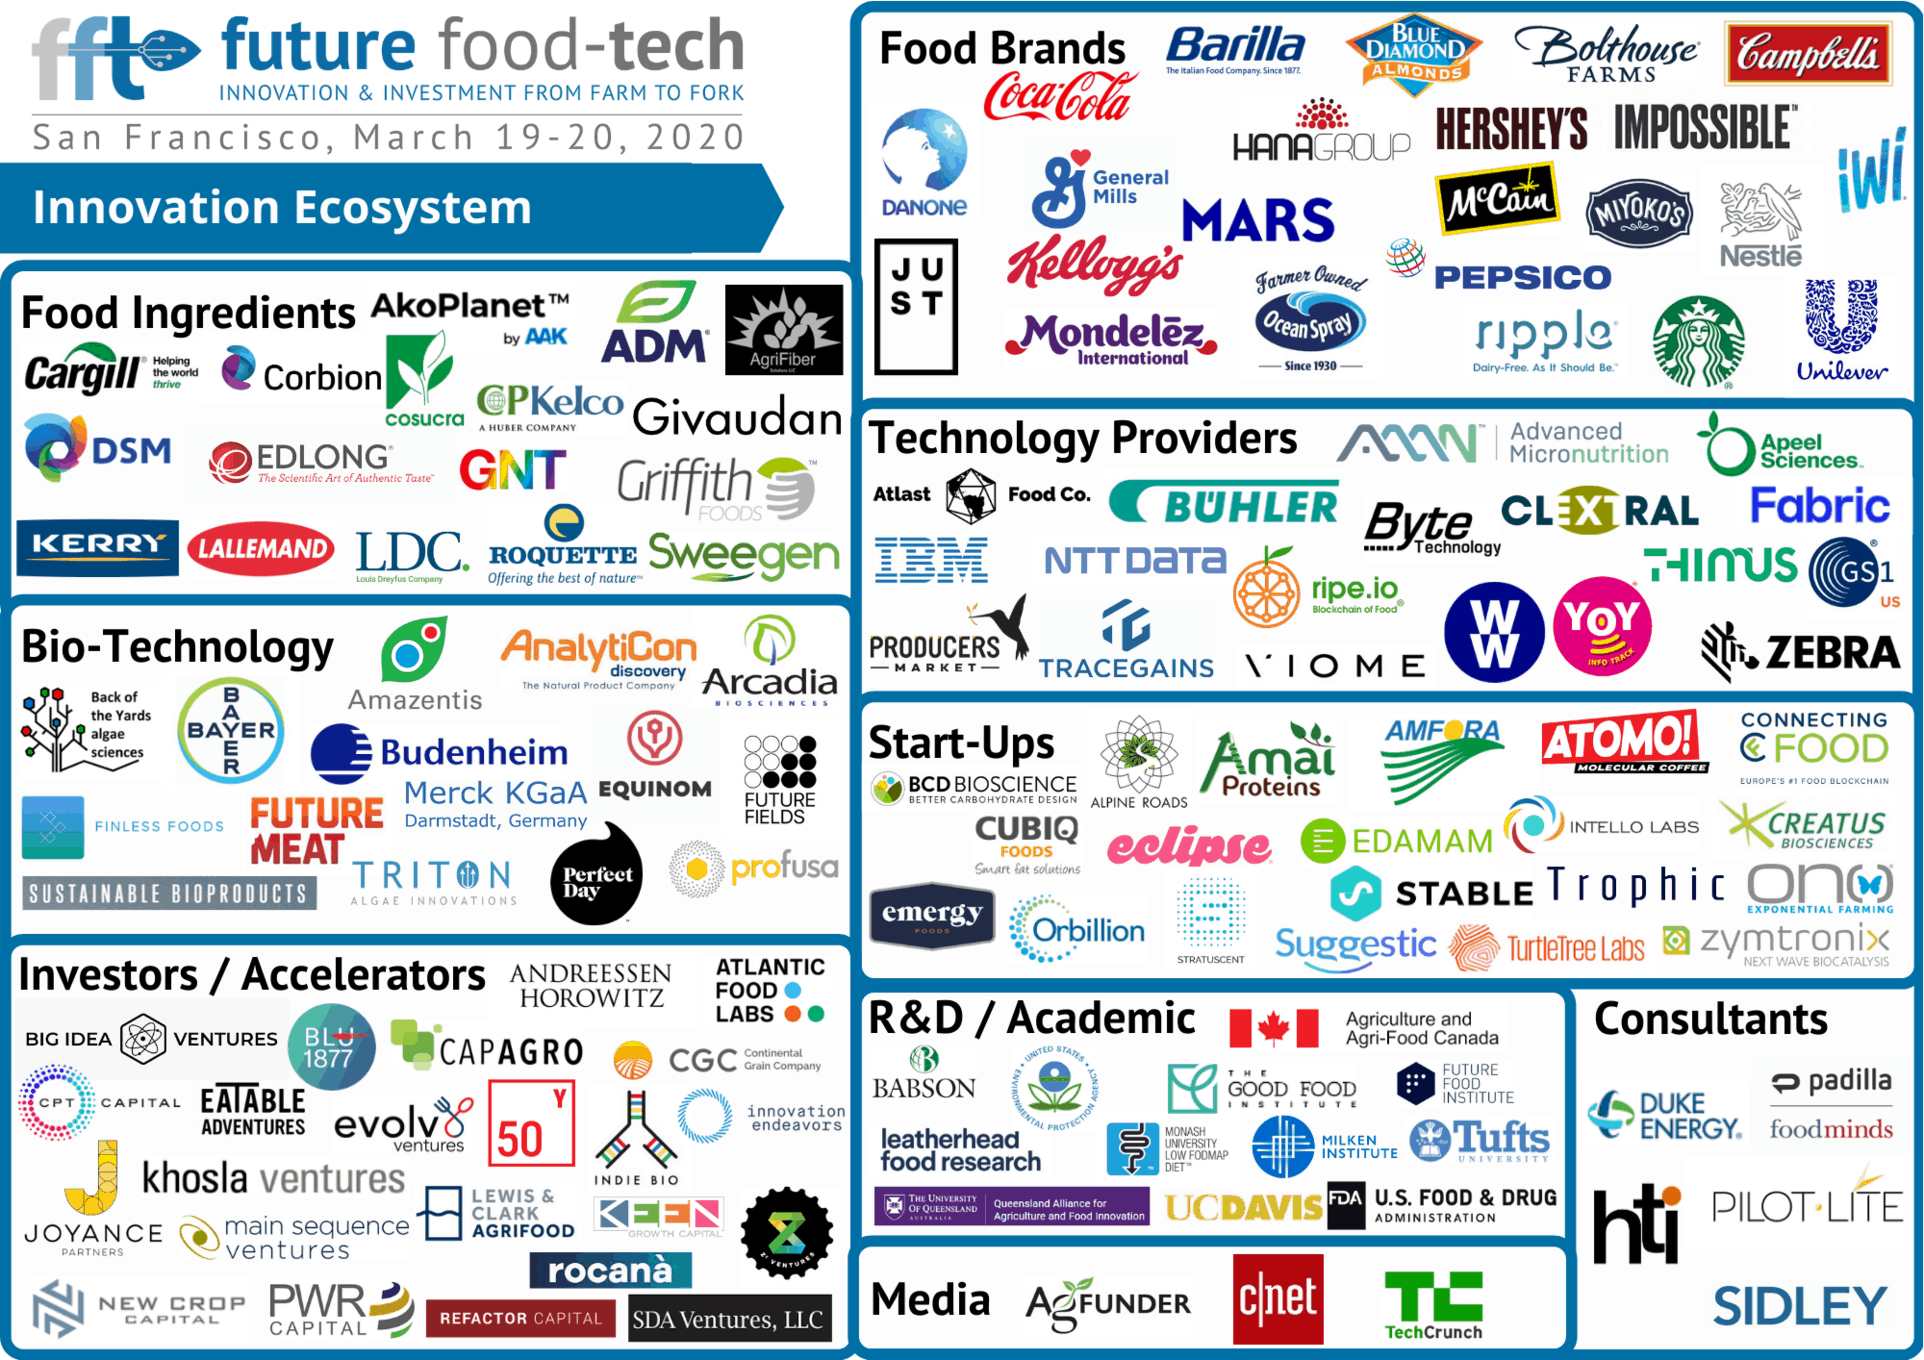 Food brands (11) - Future Food-Tech San Francisco